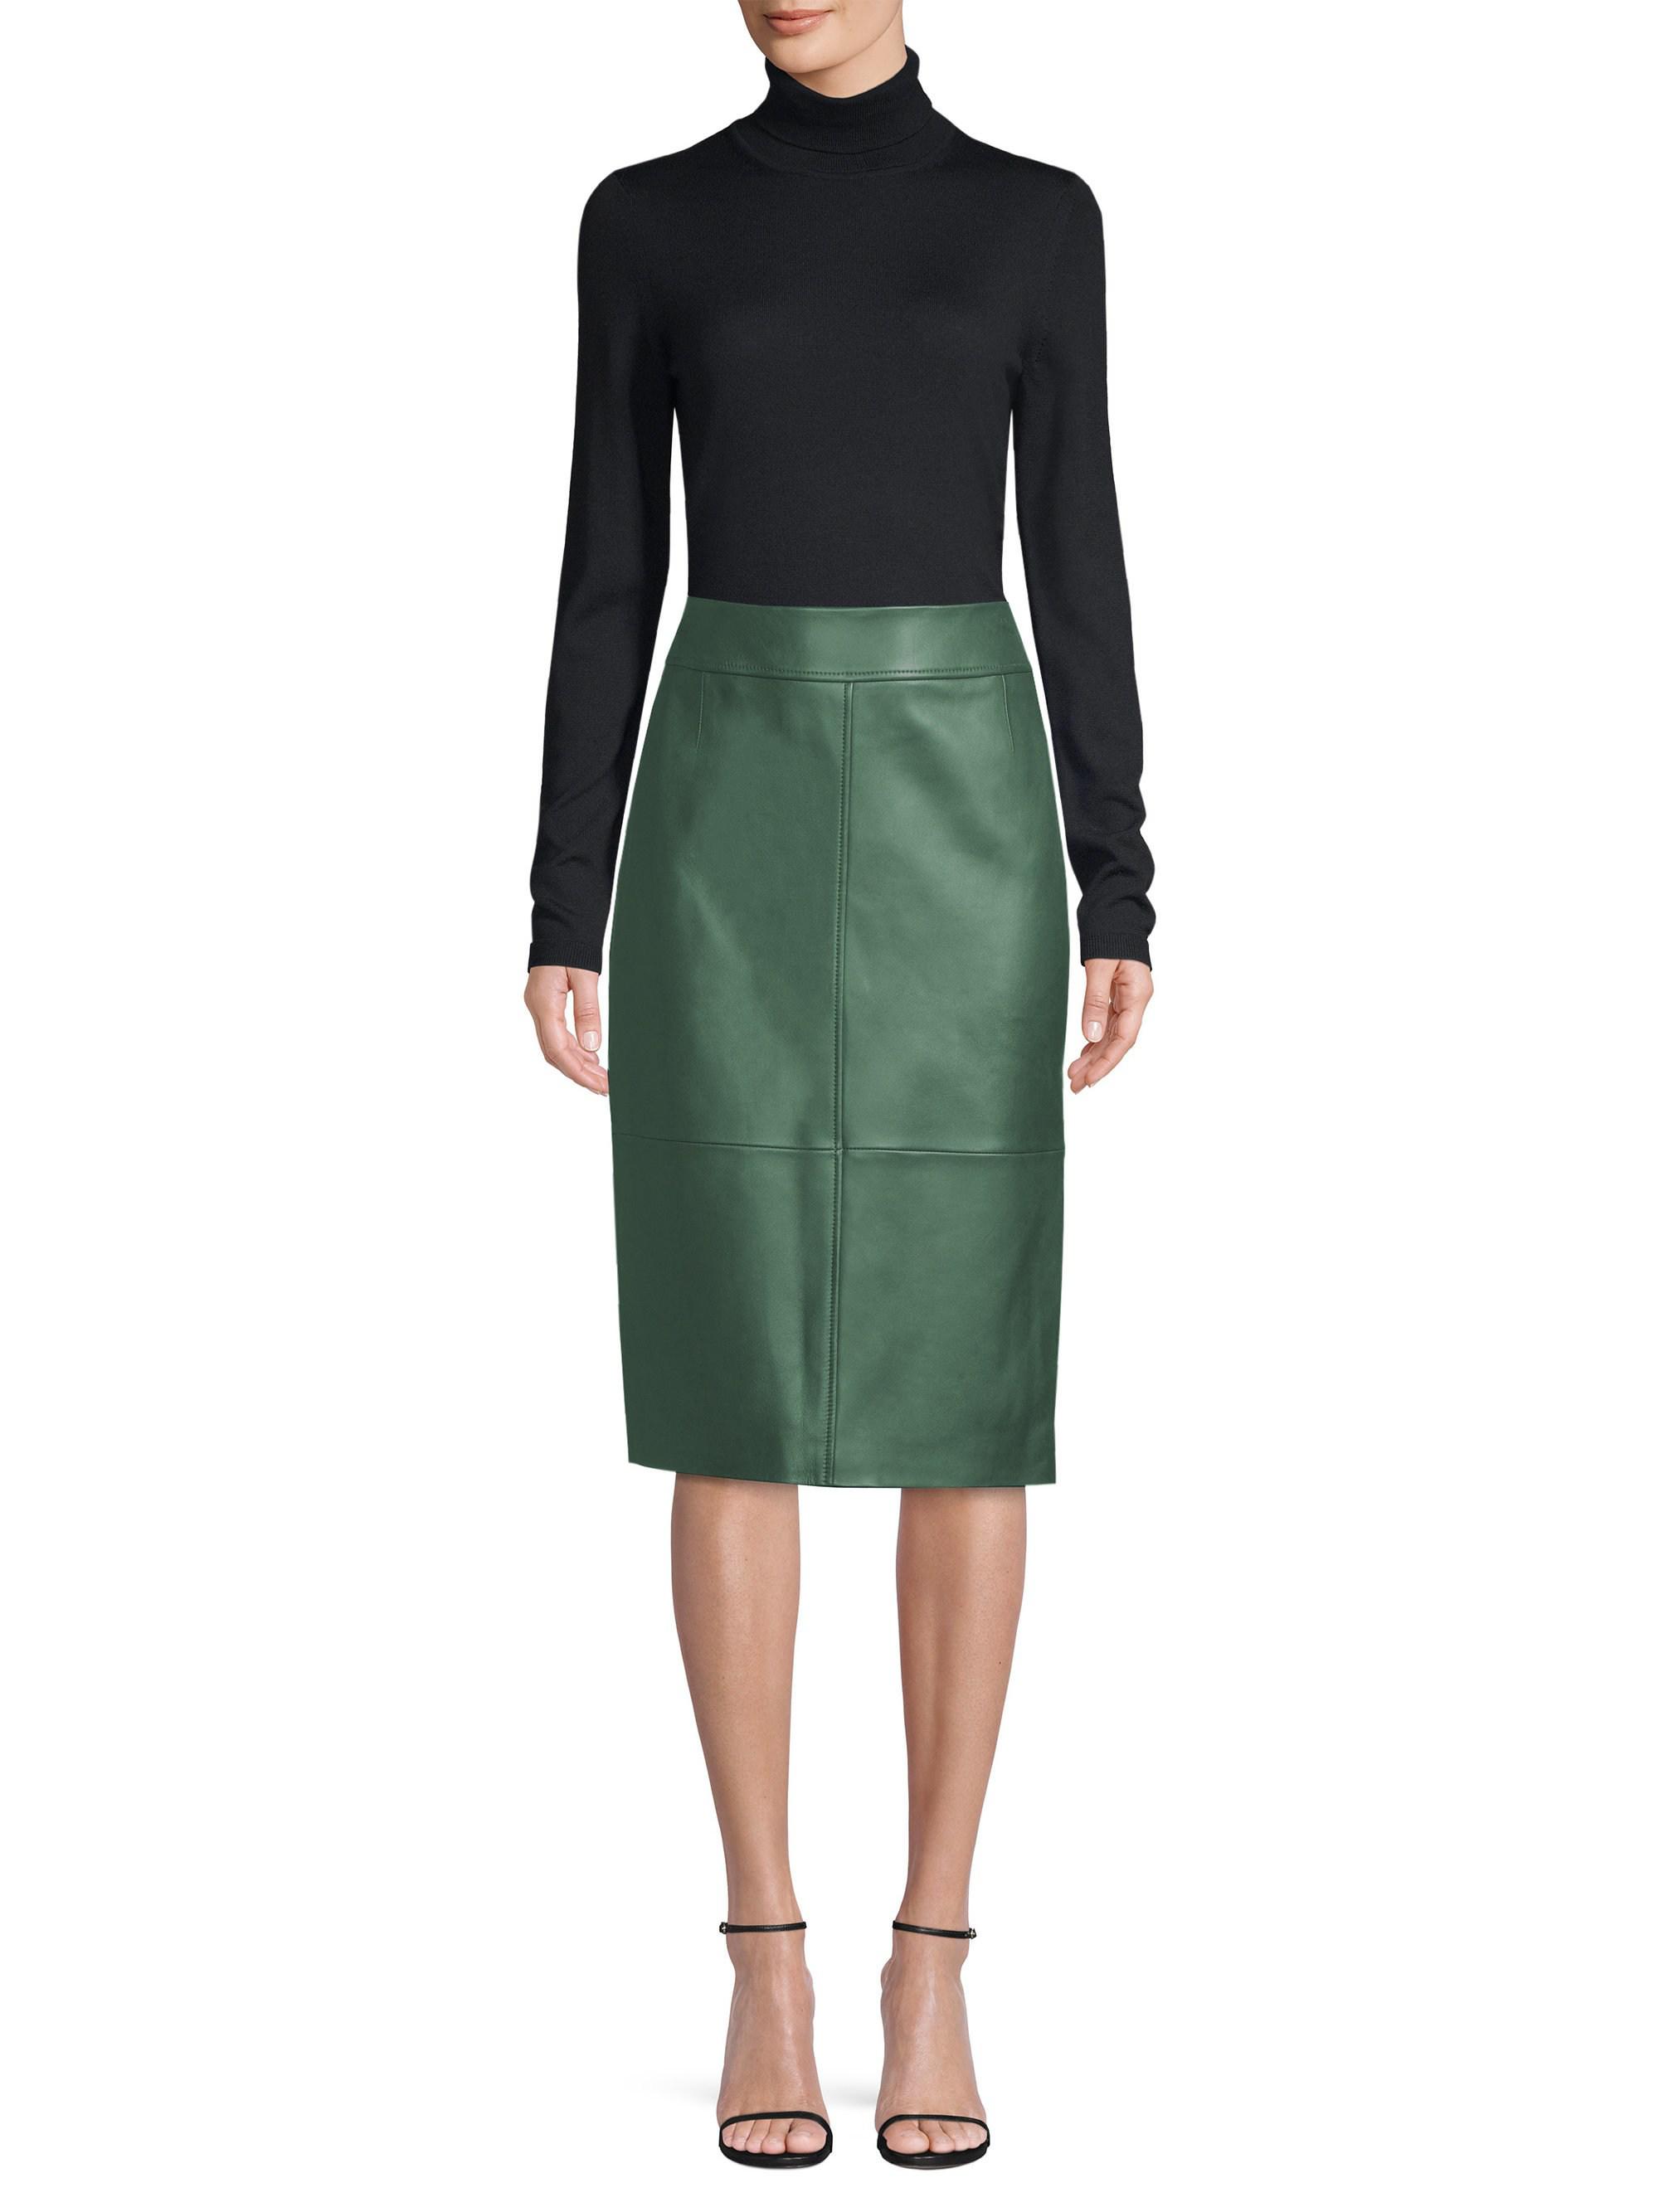 BOSS by HUGO BOSS Selrita Leather Pencil Skirt in Green - Lyst